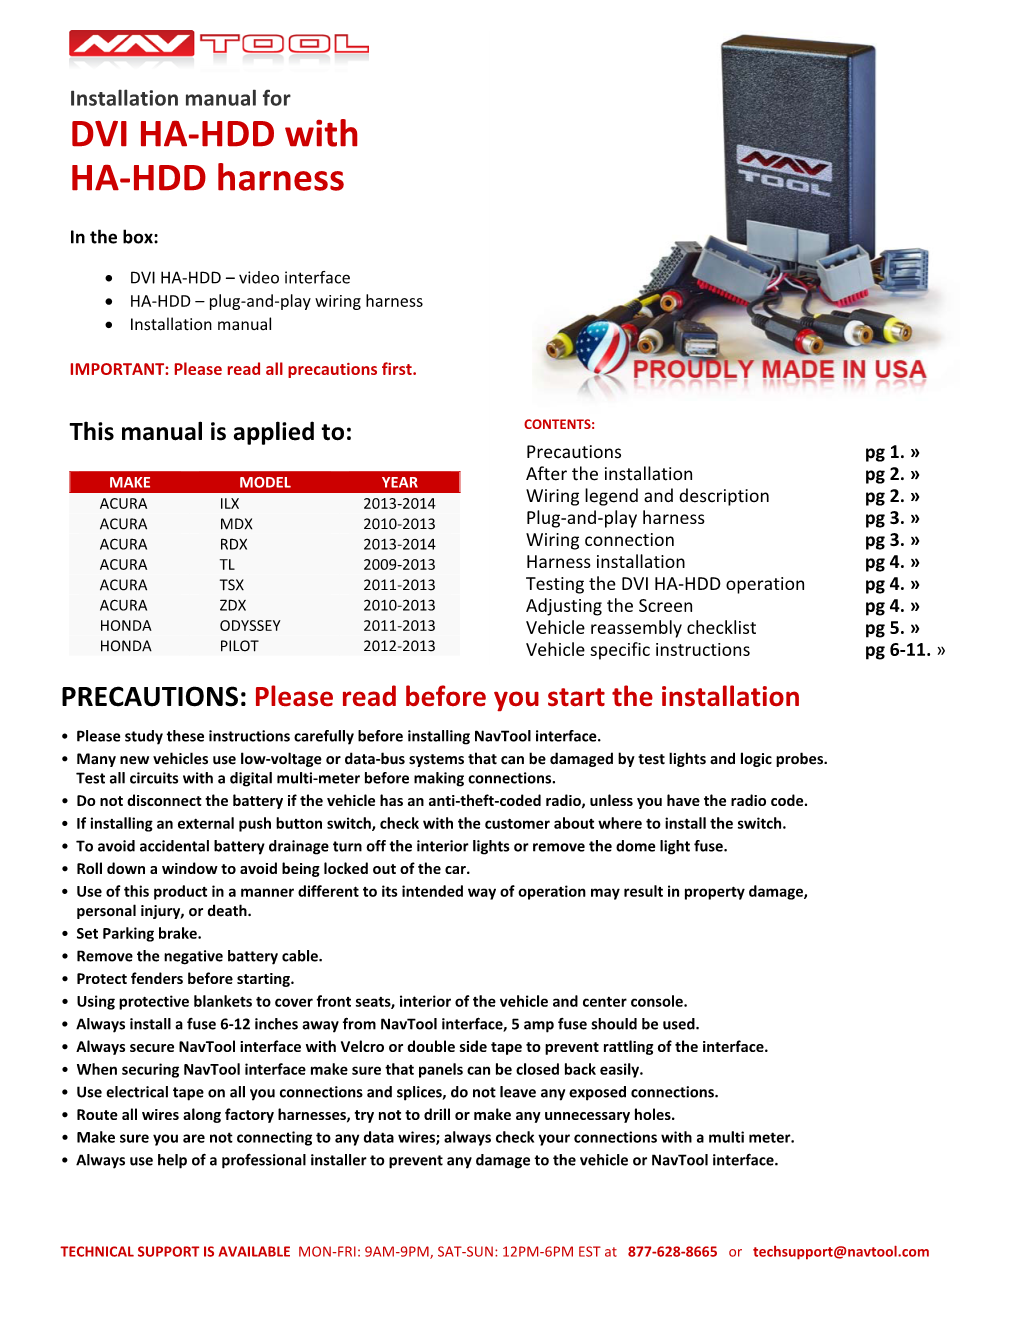 DVI HA-HDD with HA-HDD Harness